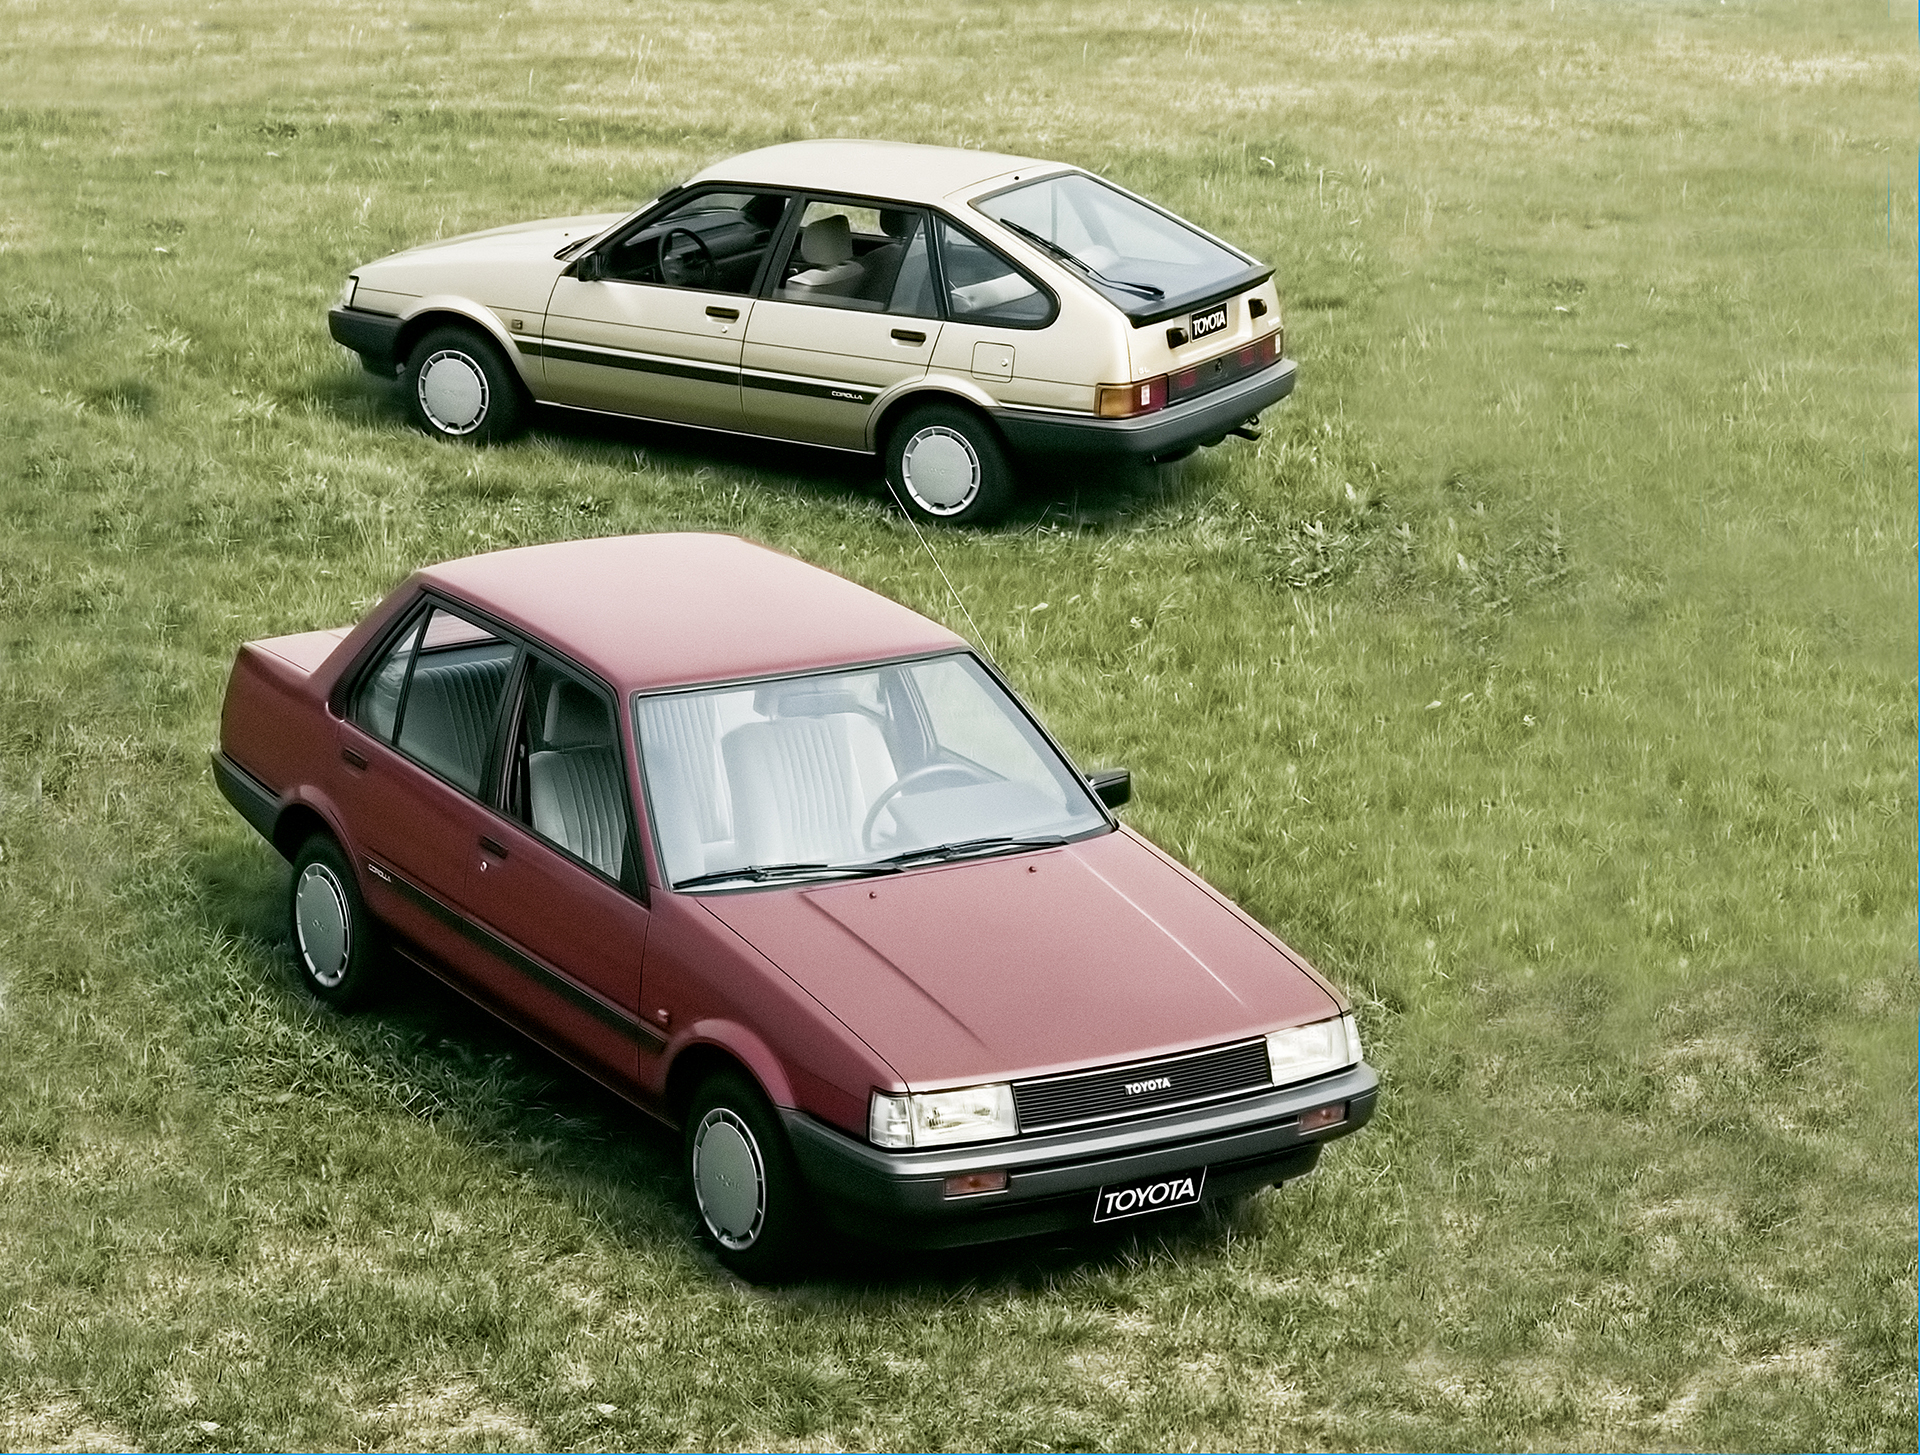 Europe - The 5th Generation Corolla (1983 - 1987)